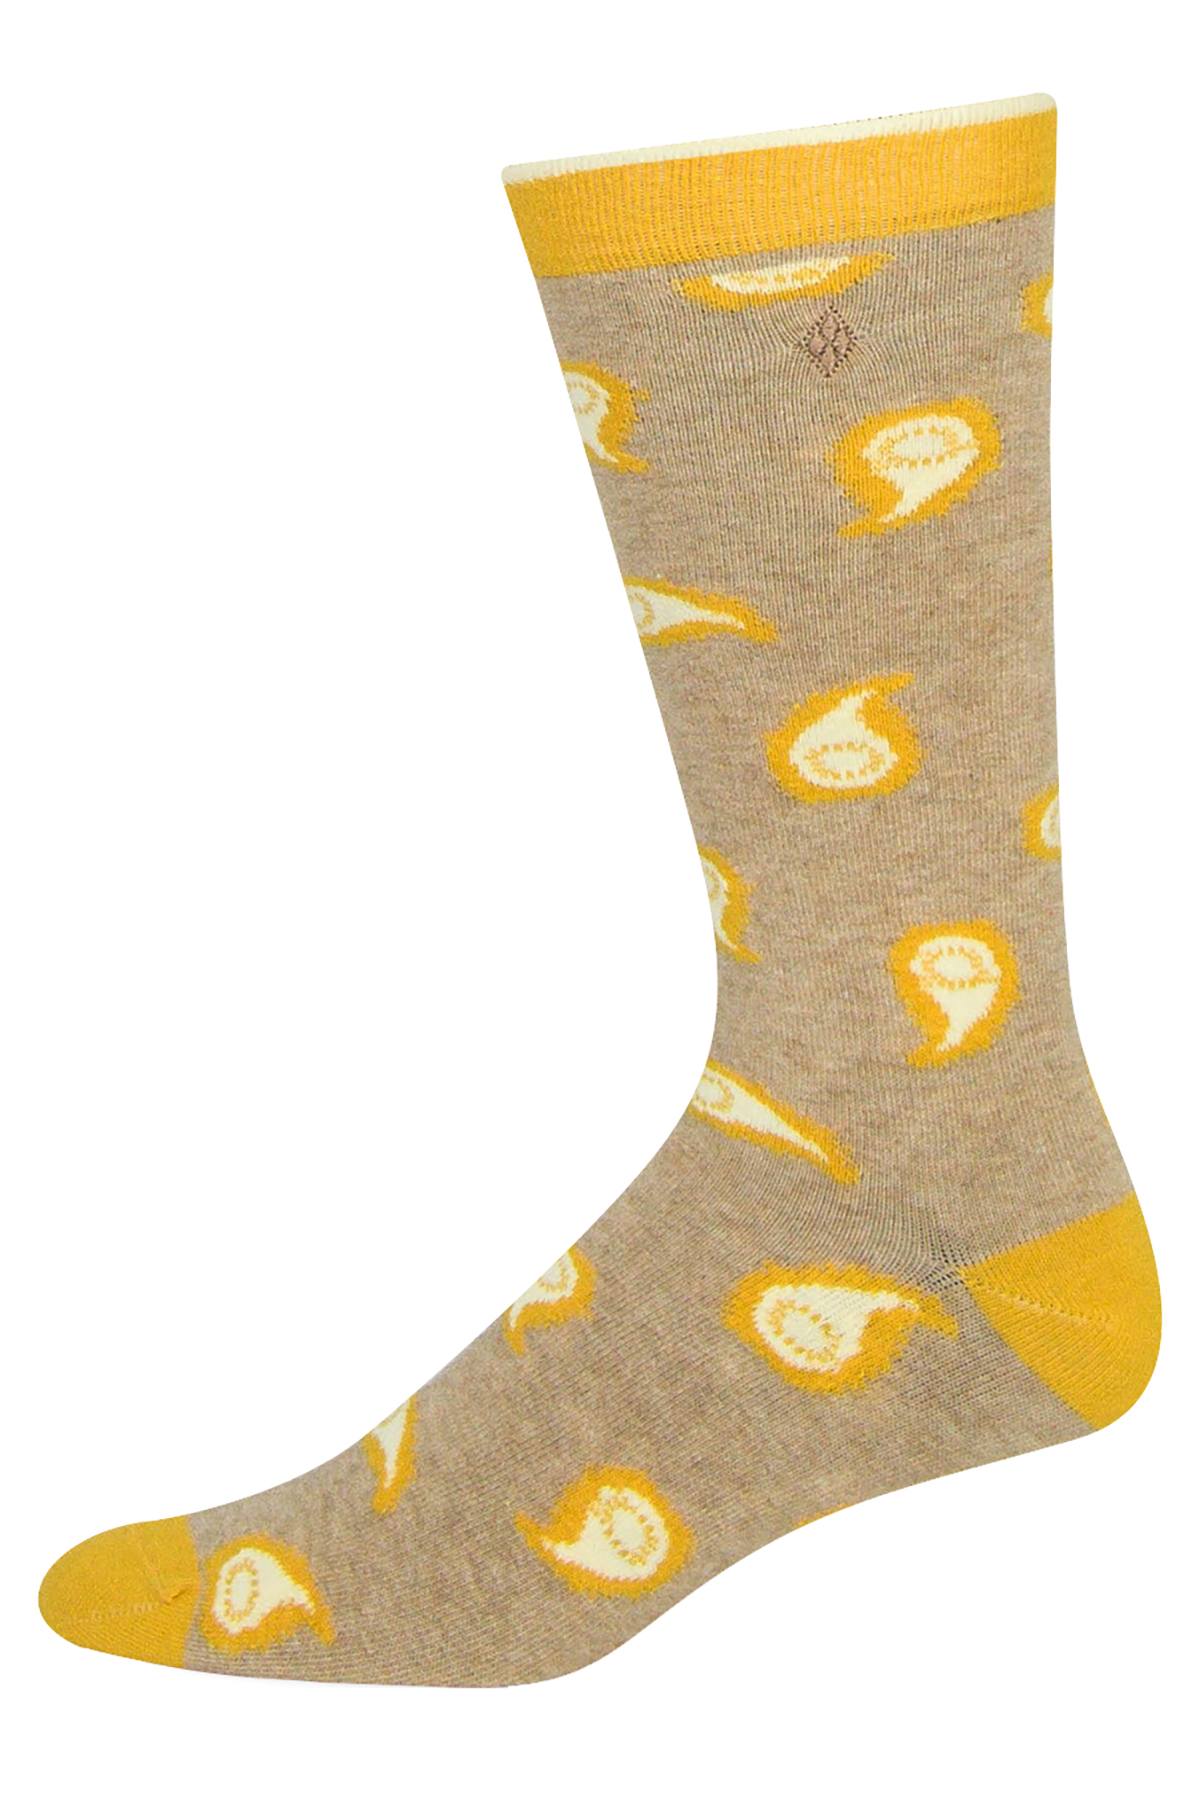 Argoz Yellow Oatmeal Crew Sock